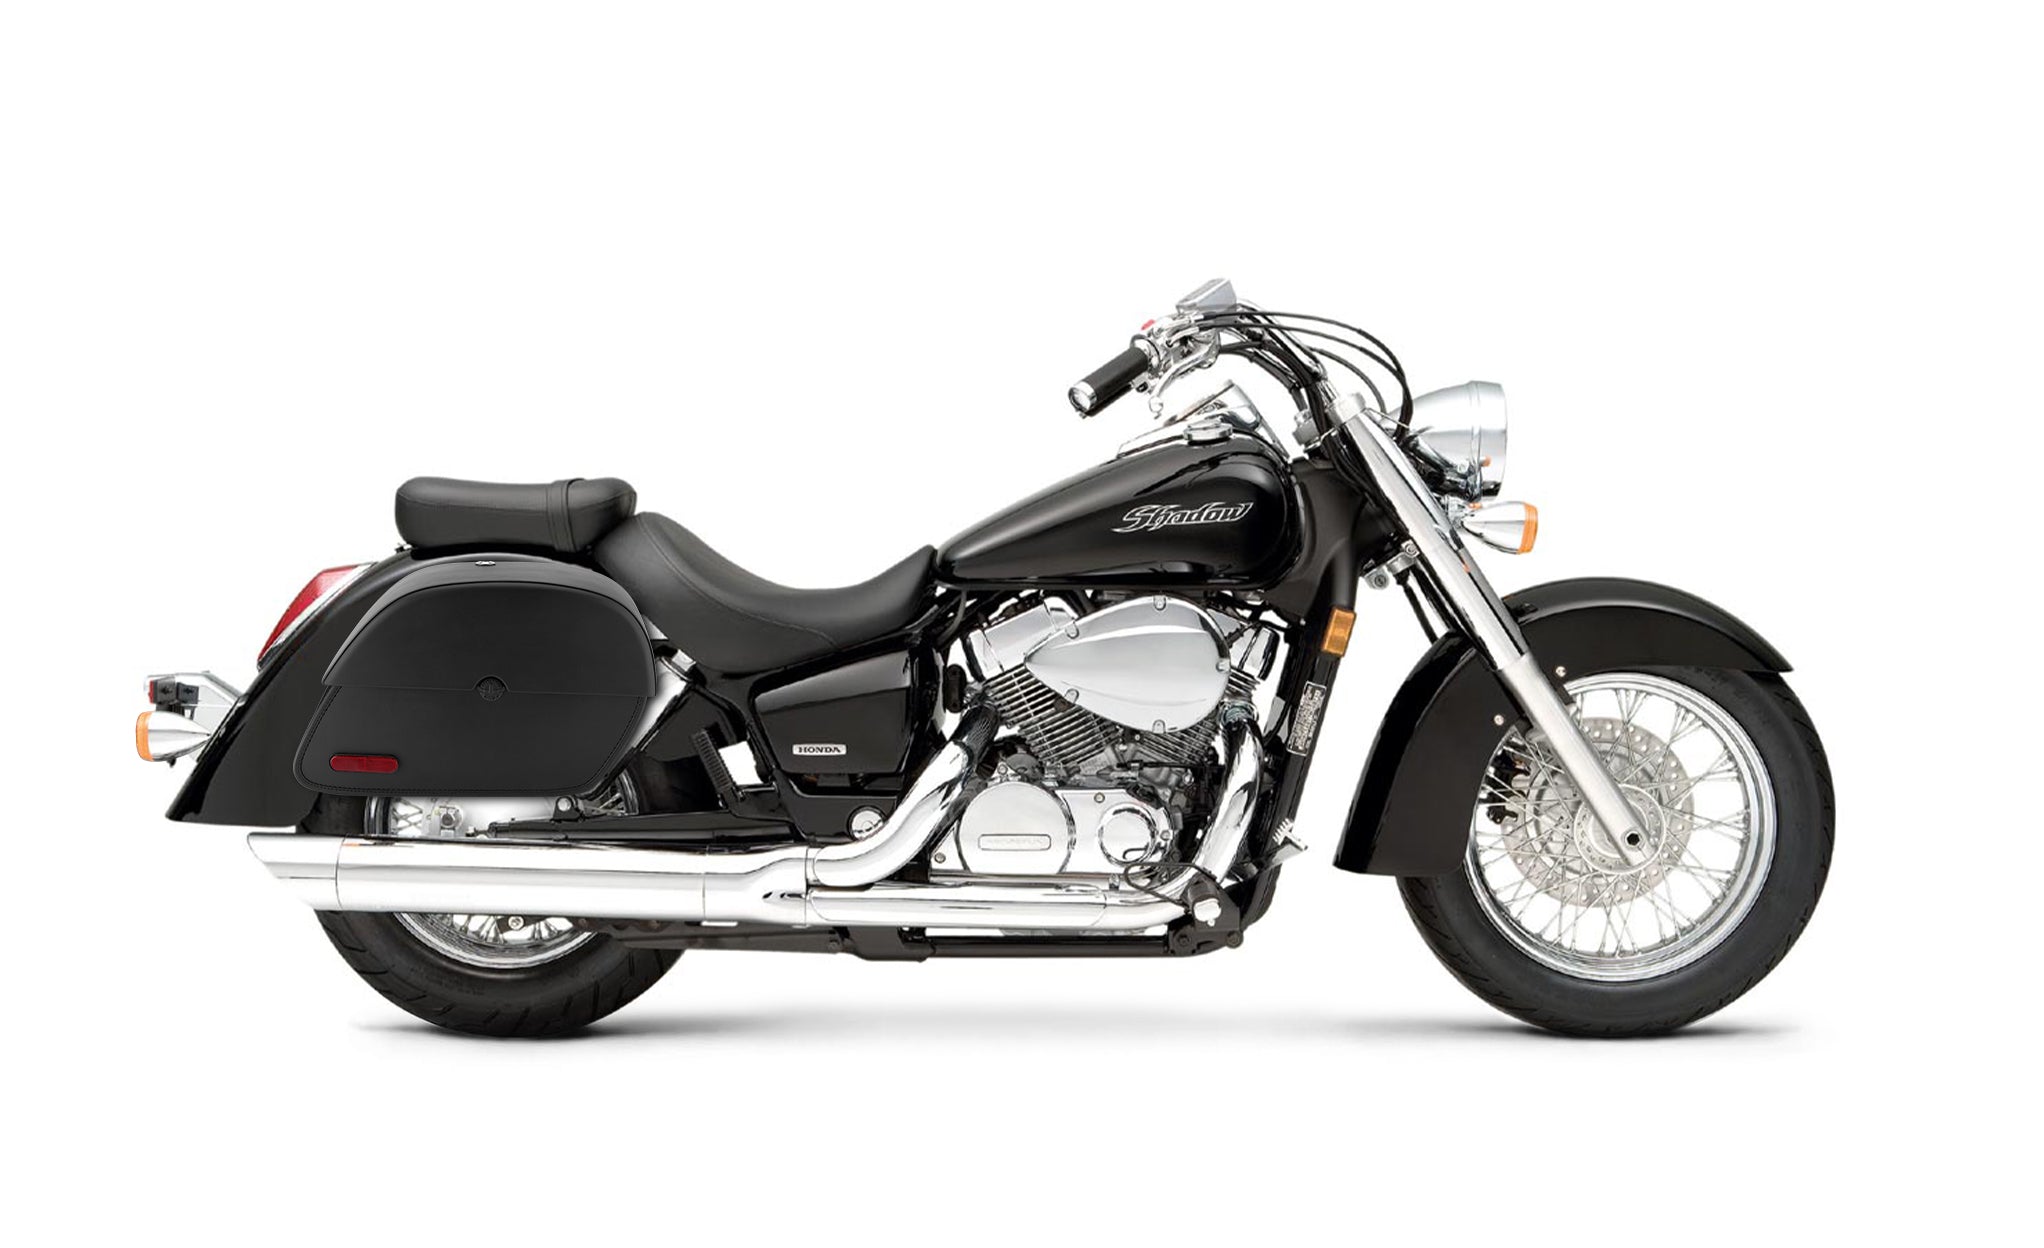 Viking Panzer Medium Honda Shadow 750 Aero Leather Motorcycle Saddlebags Engineering Excellence with Bag on Bike @expand